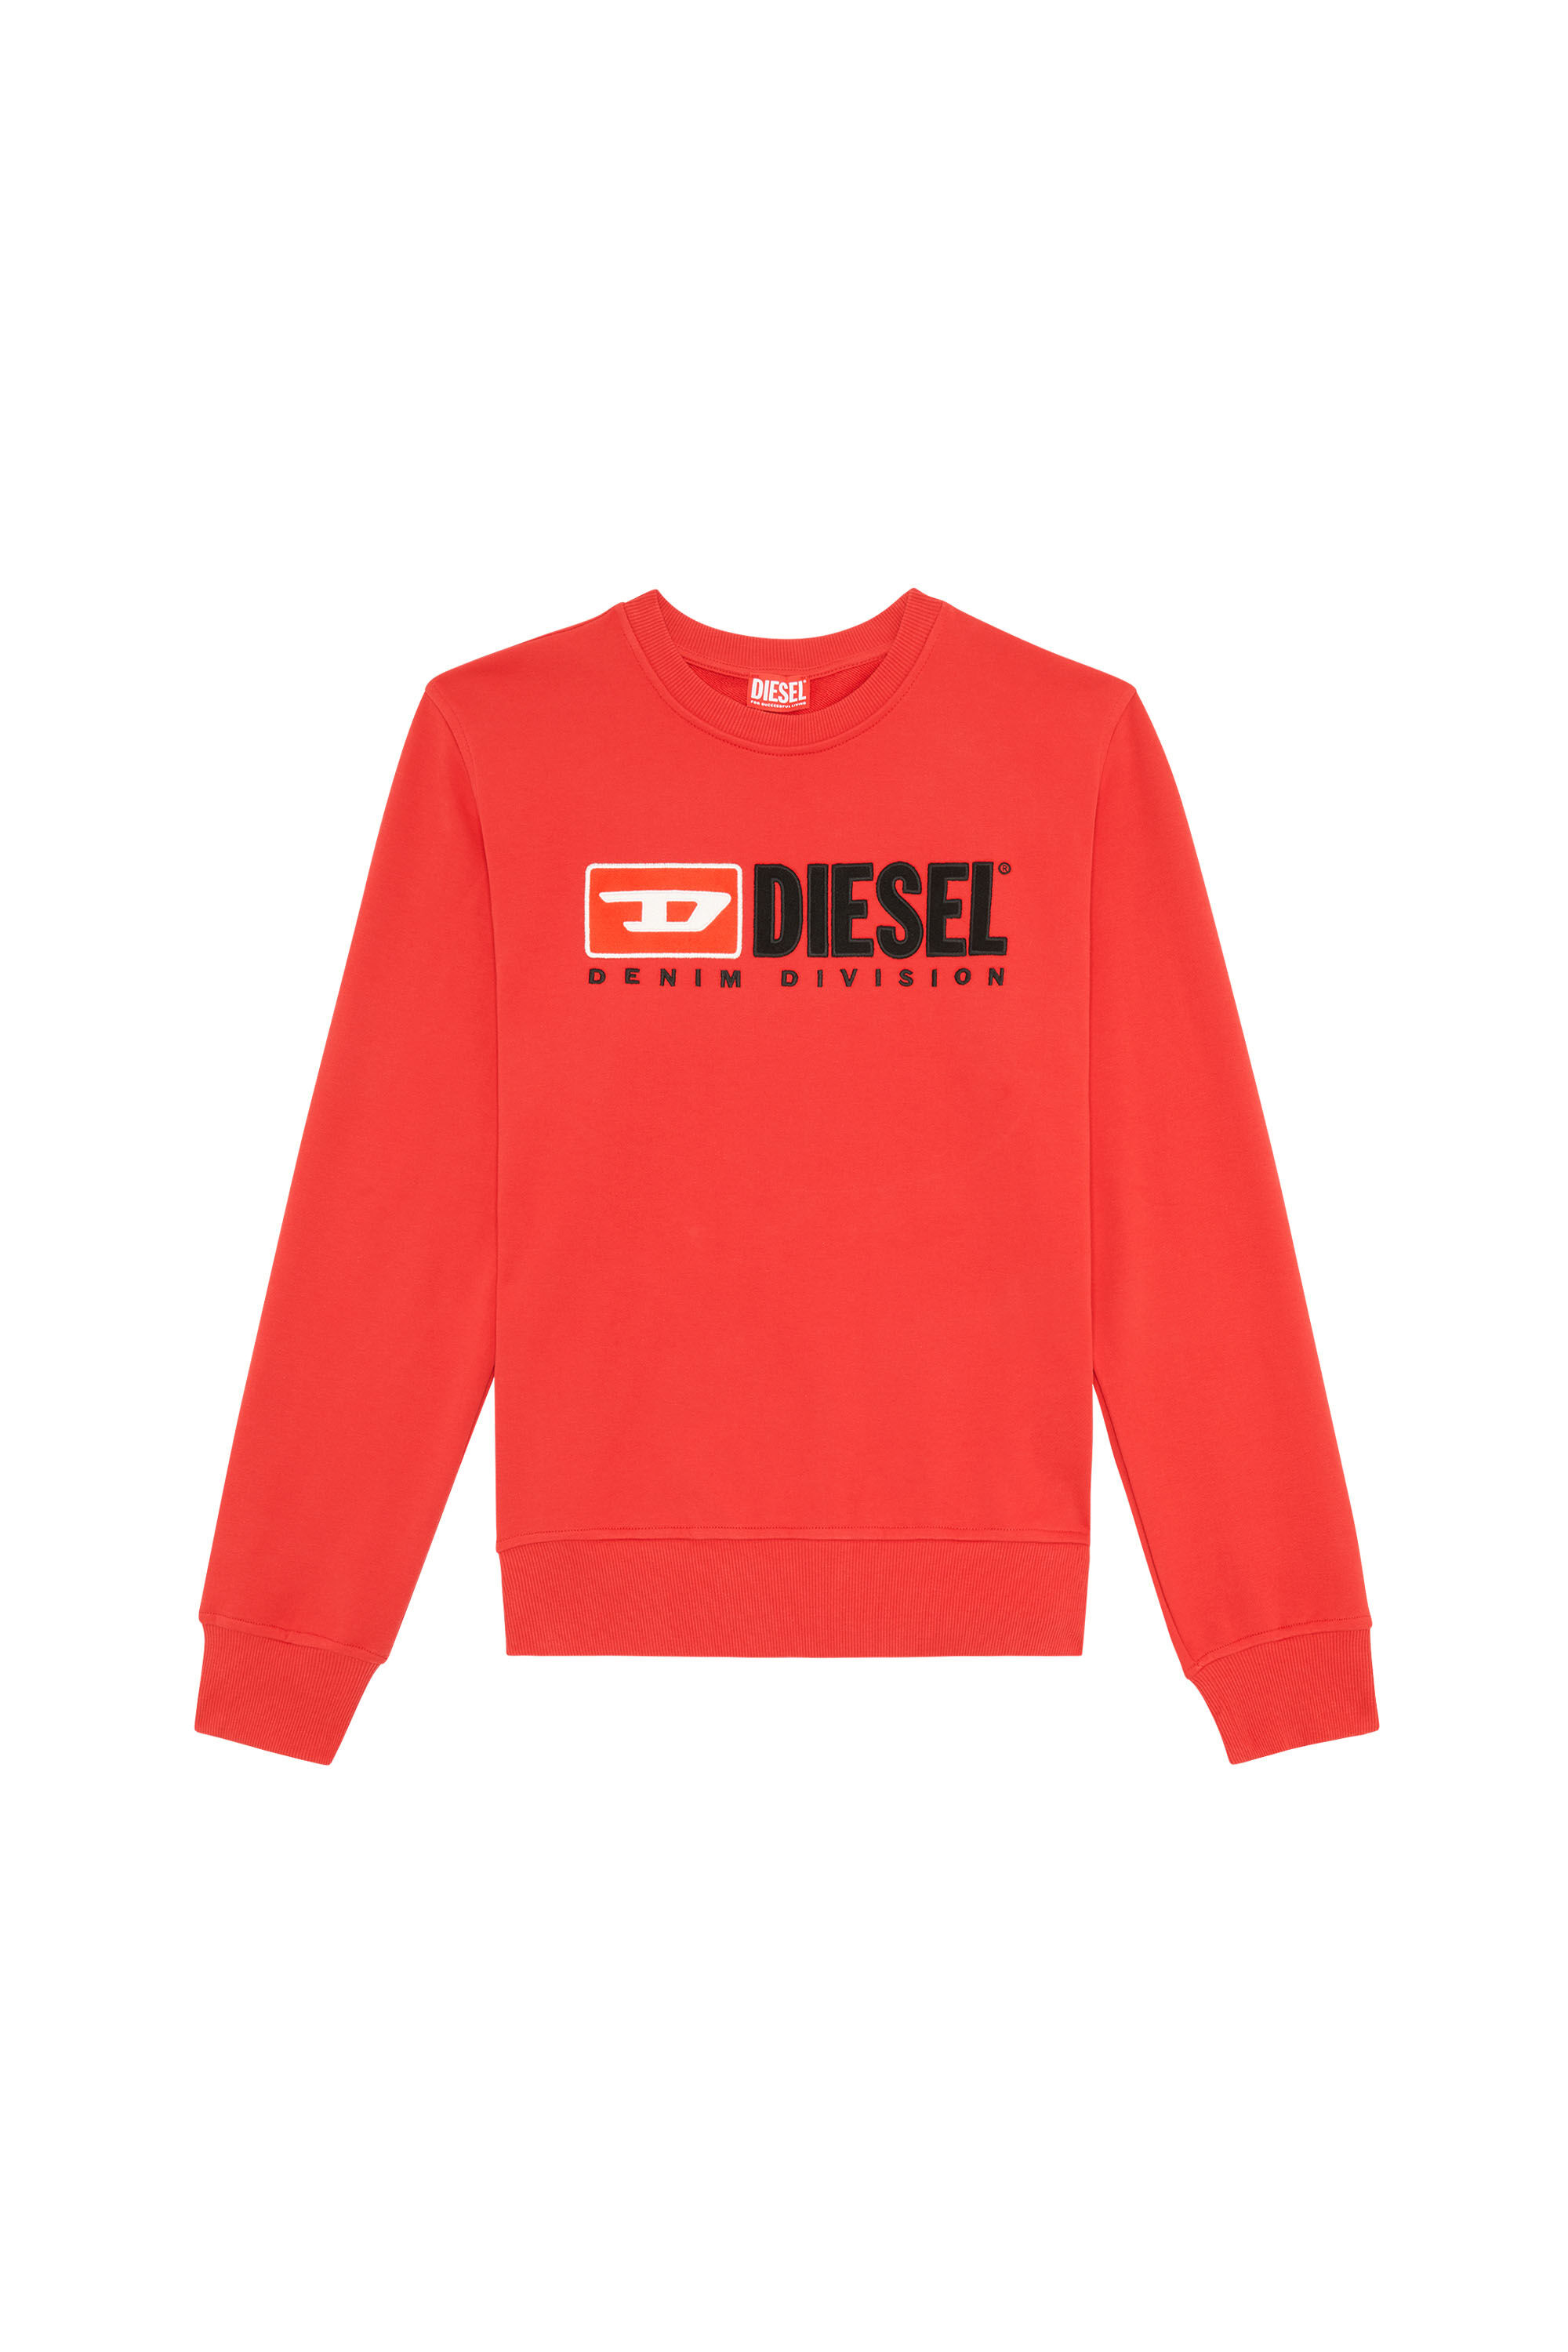 Diesel - S-GINN-DIV, Red - Image 2